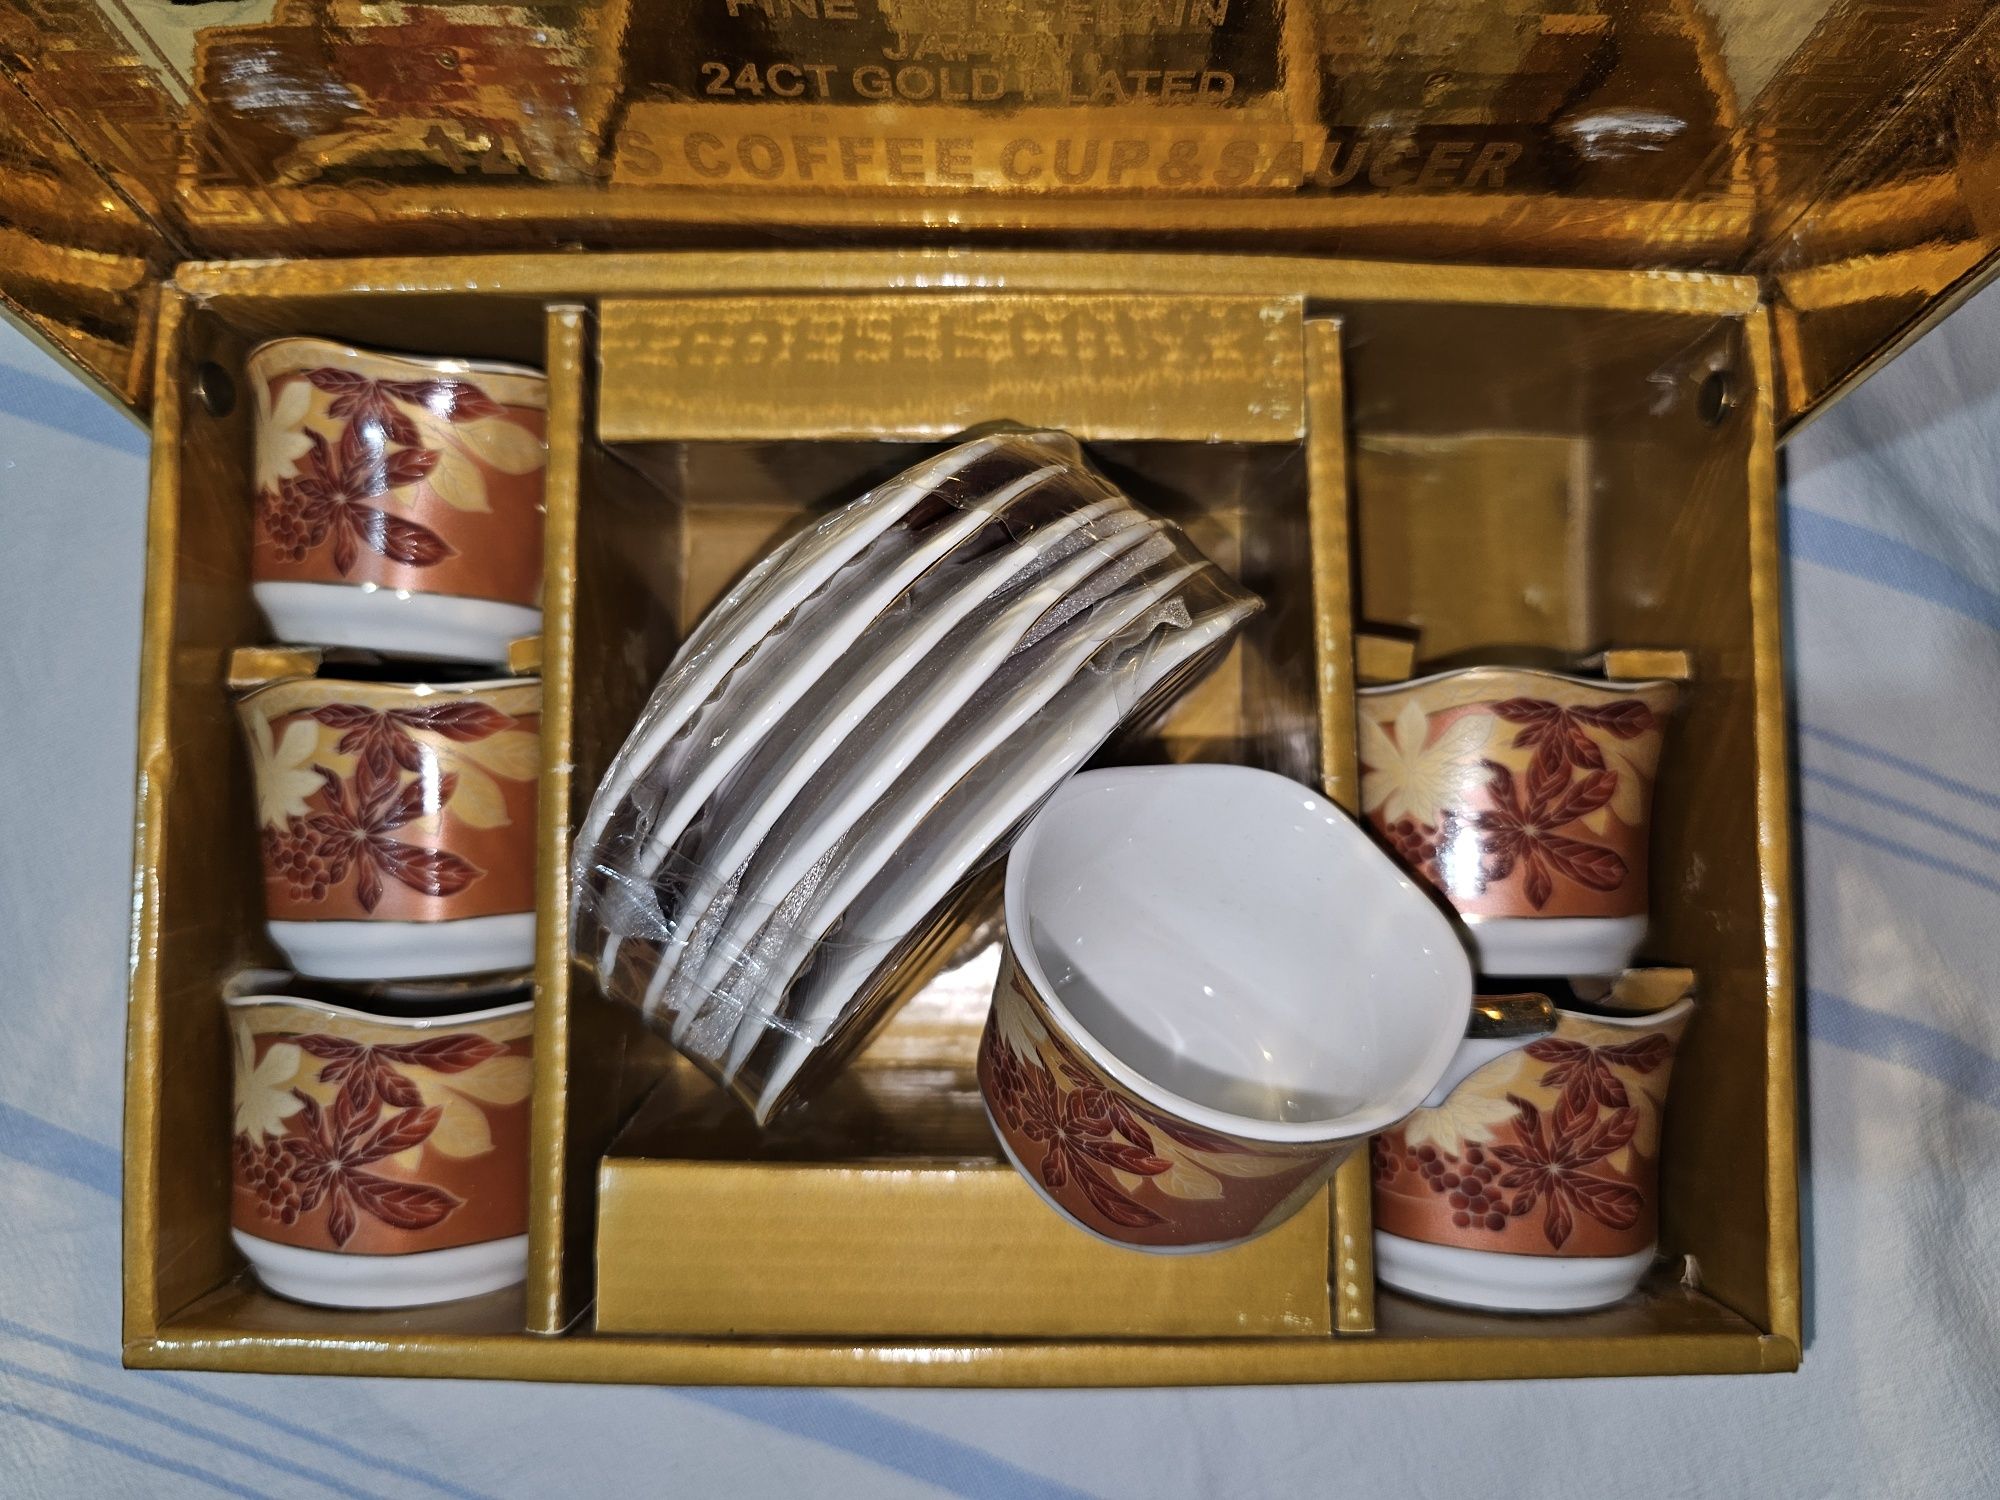 Подарочный набор посуды Yamasen 24K Gold Collection 
Fine Porcelain